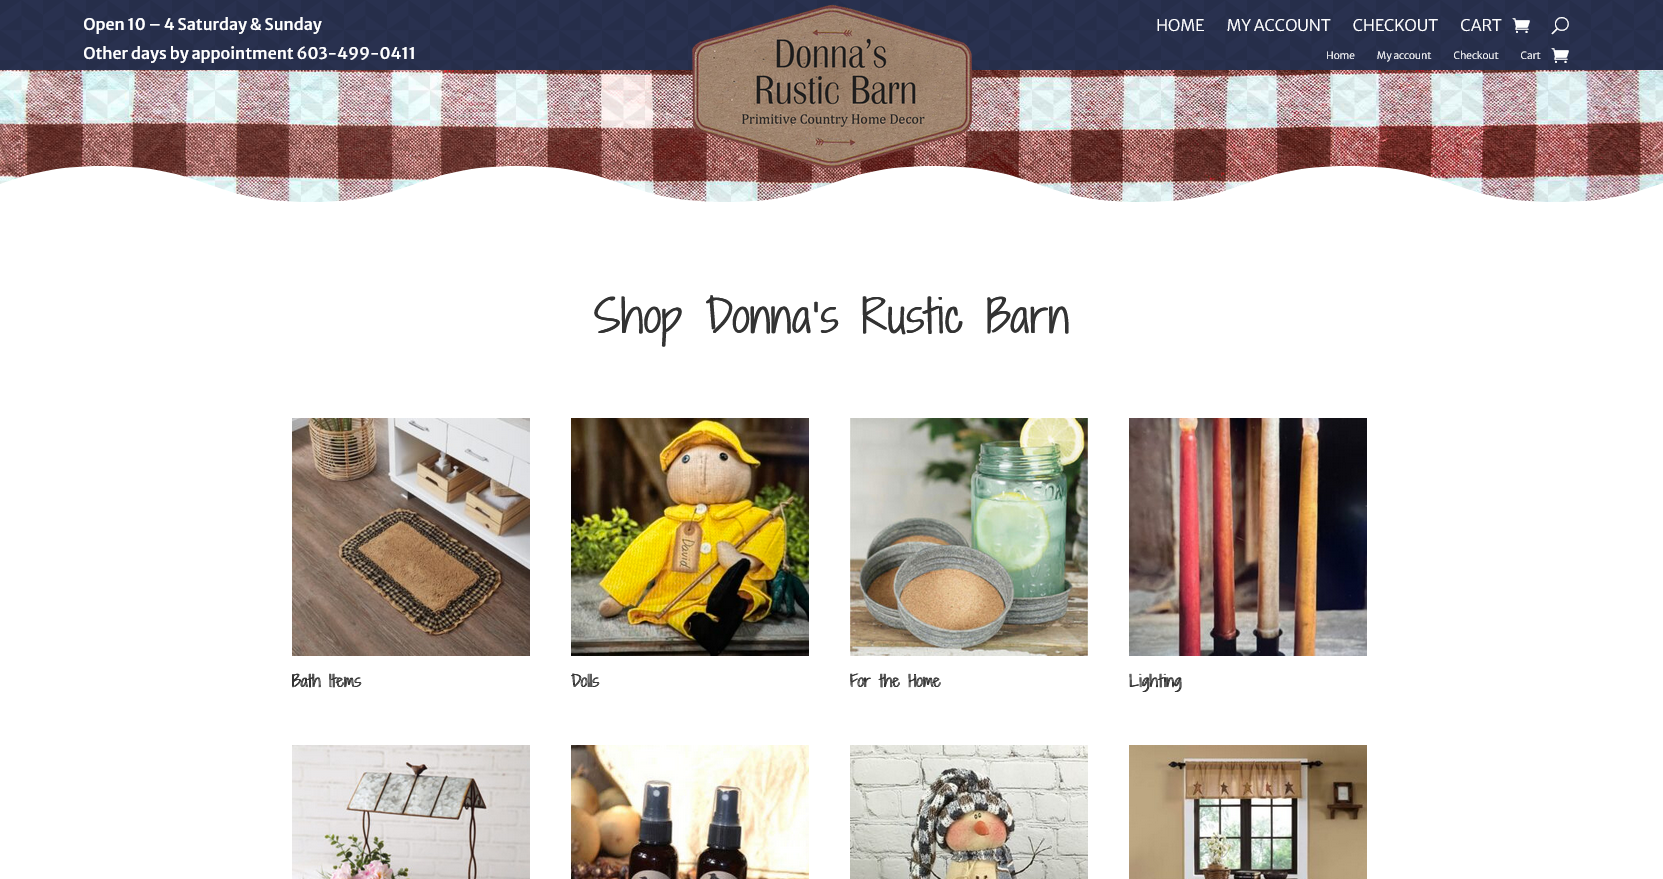 Donna's Rustic Barn